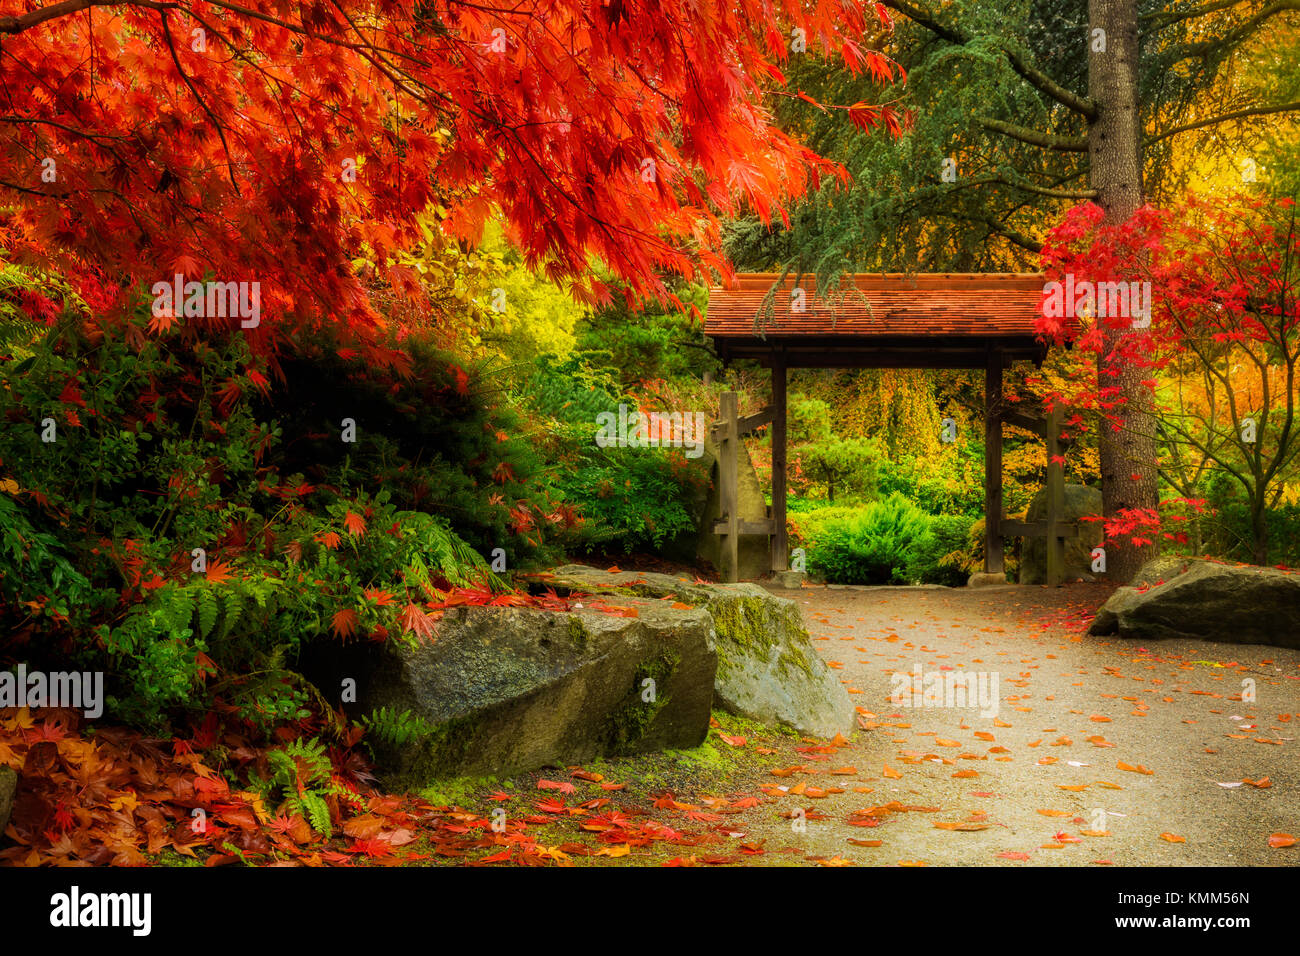 Wooden Japanese Gate And Lush Fall Foliage In Kubota Garden